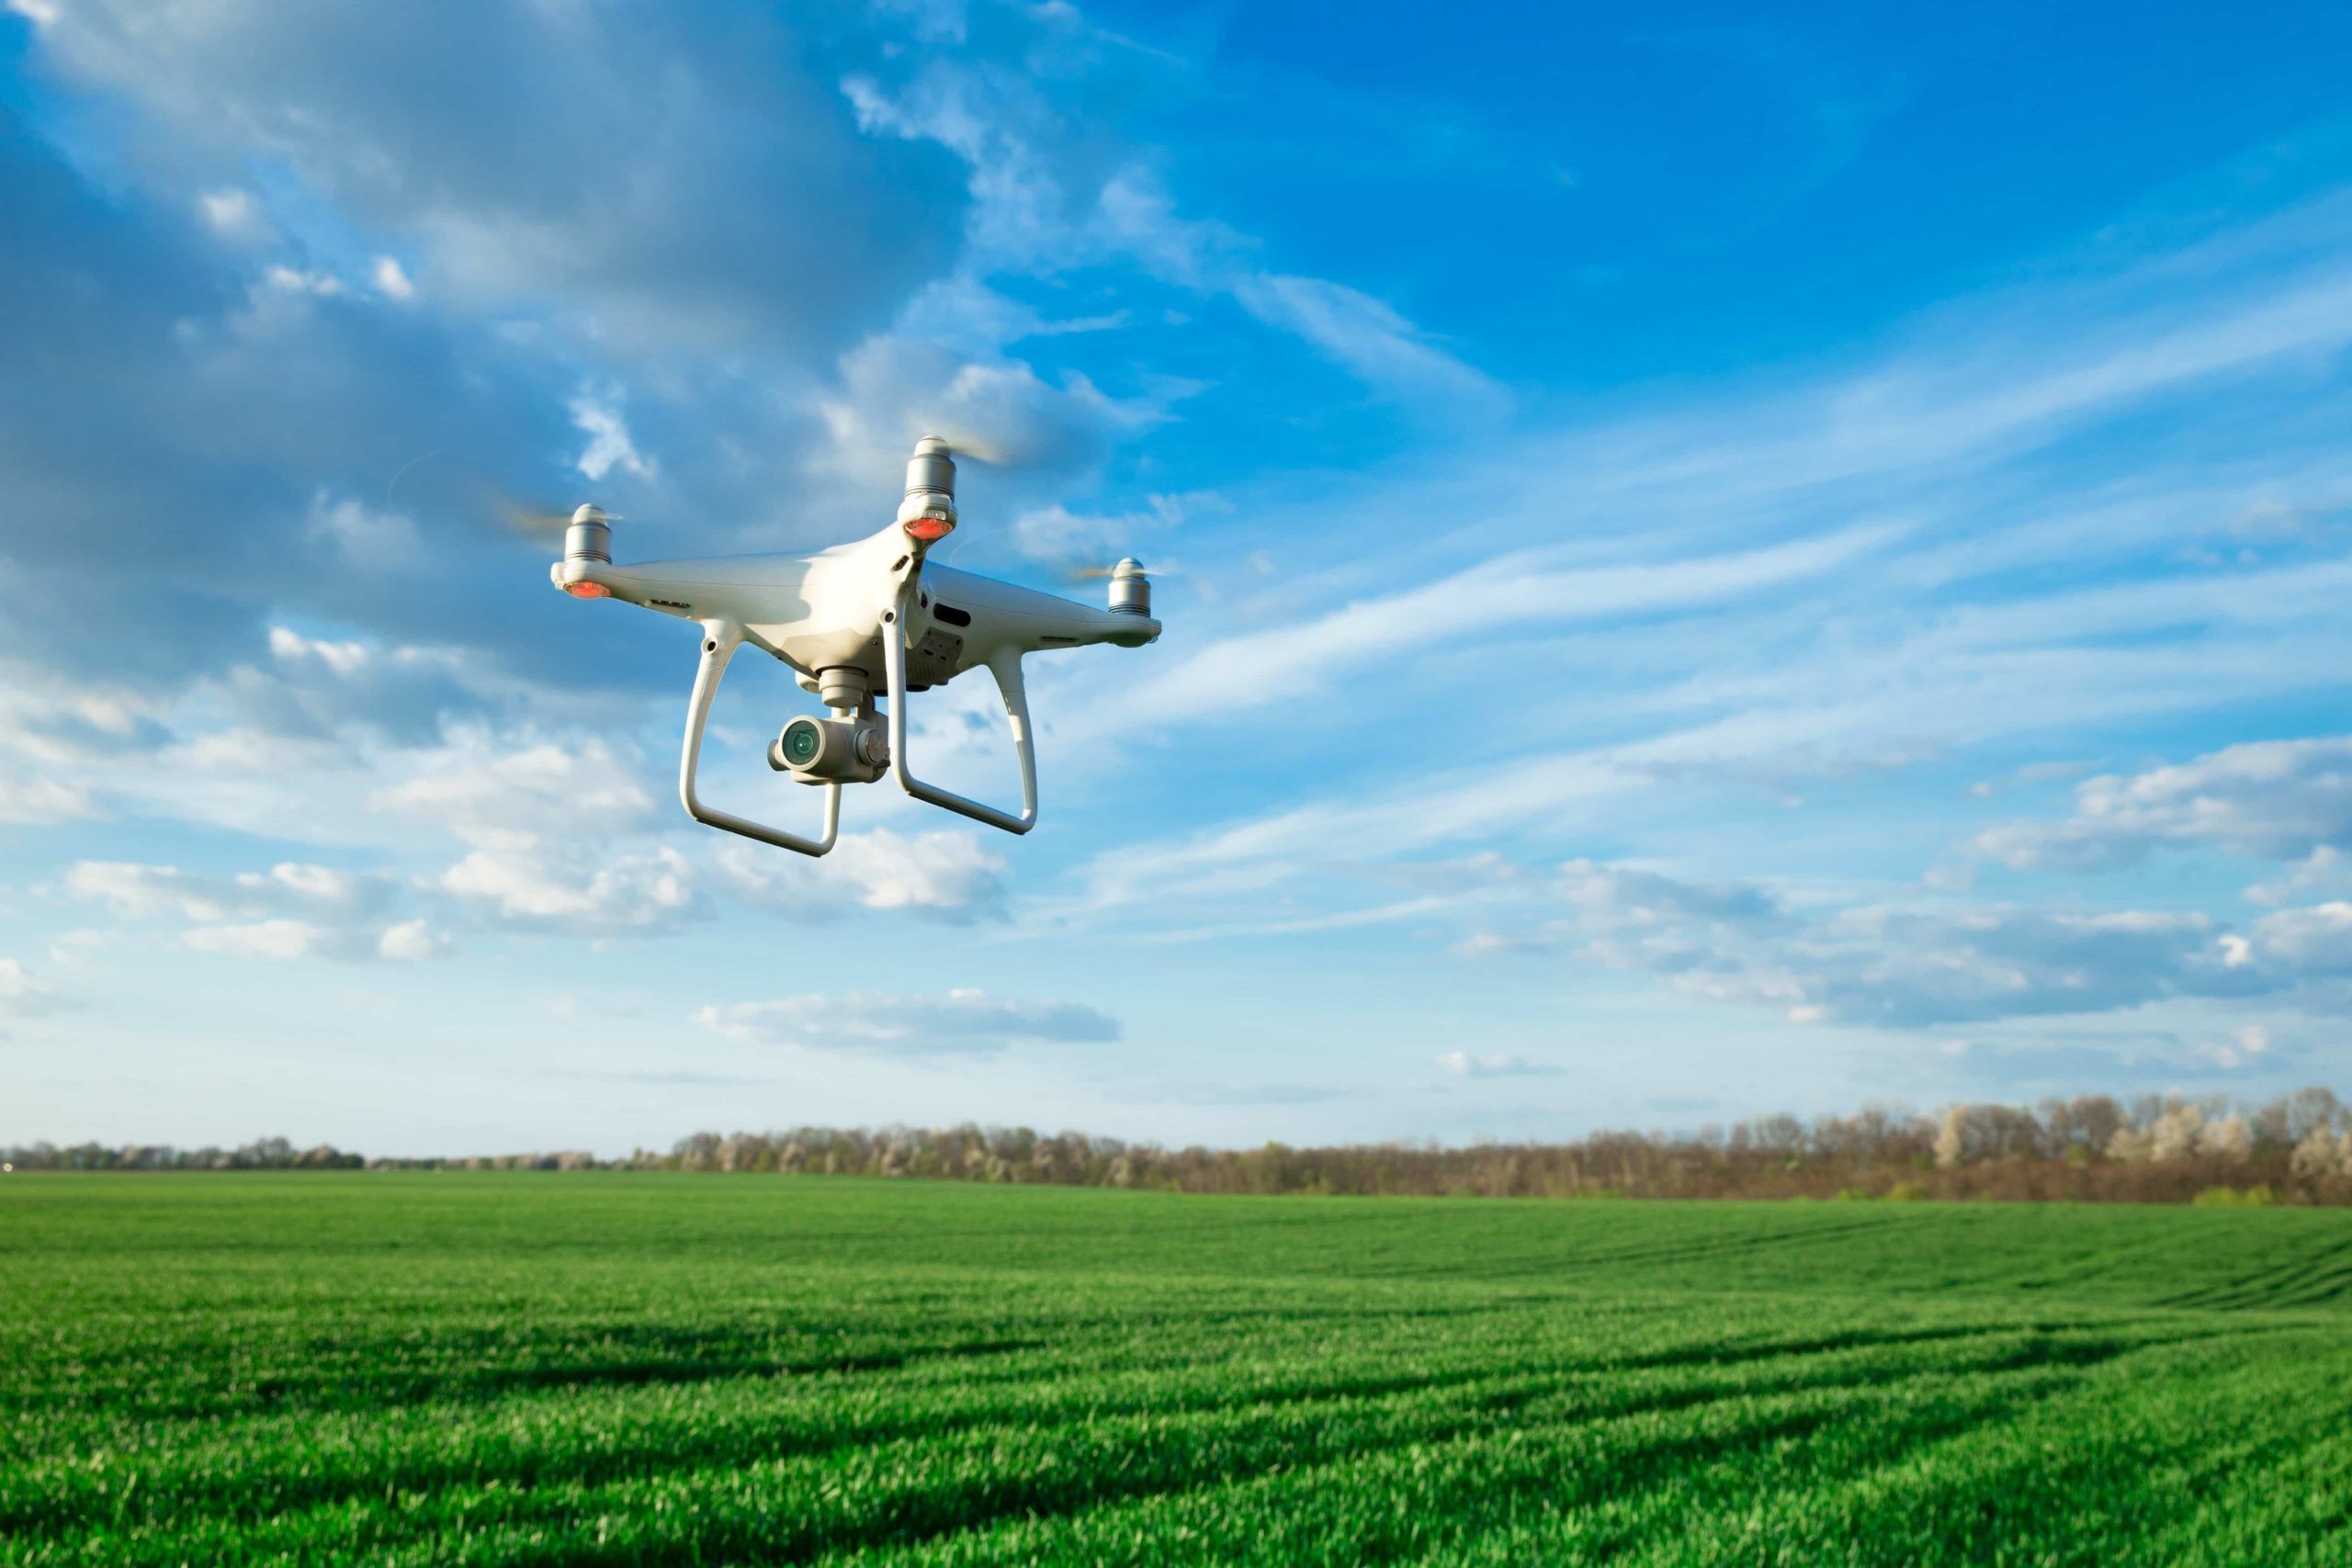 Drone-Enabled Remote Sensing and Environmental Monitoring